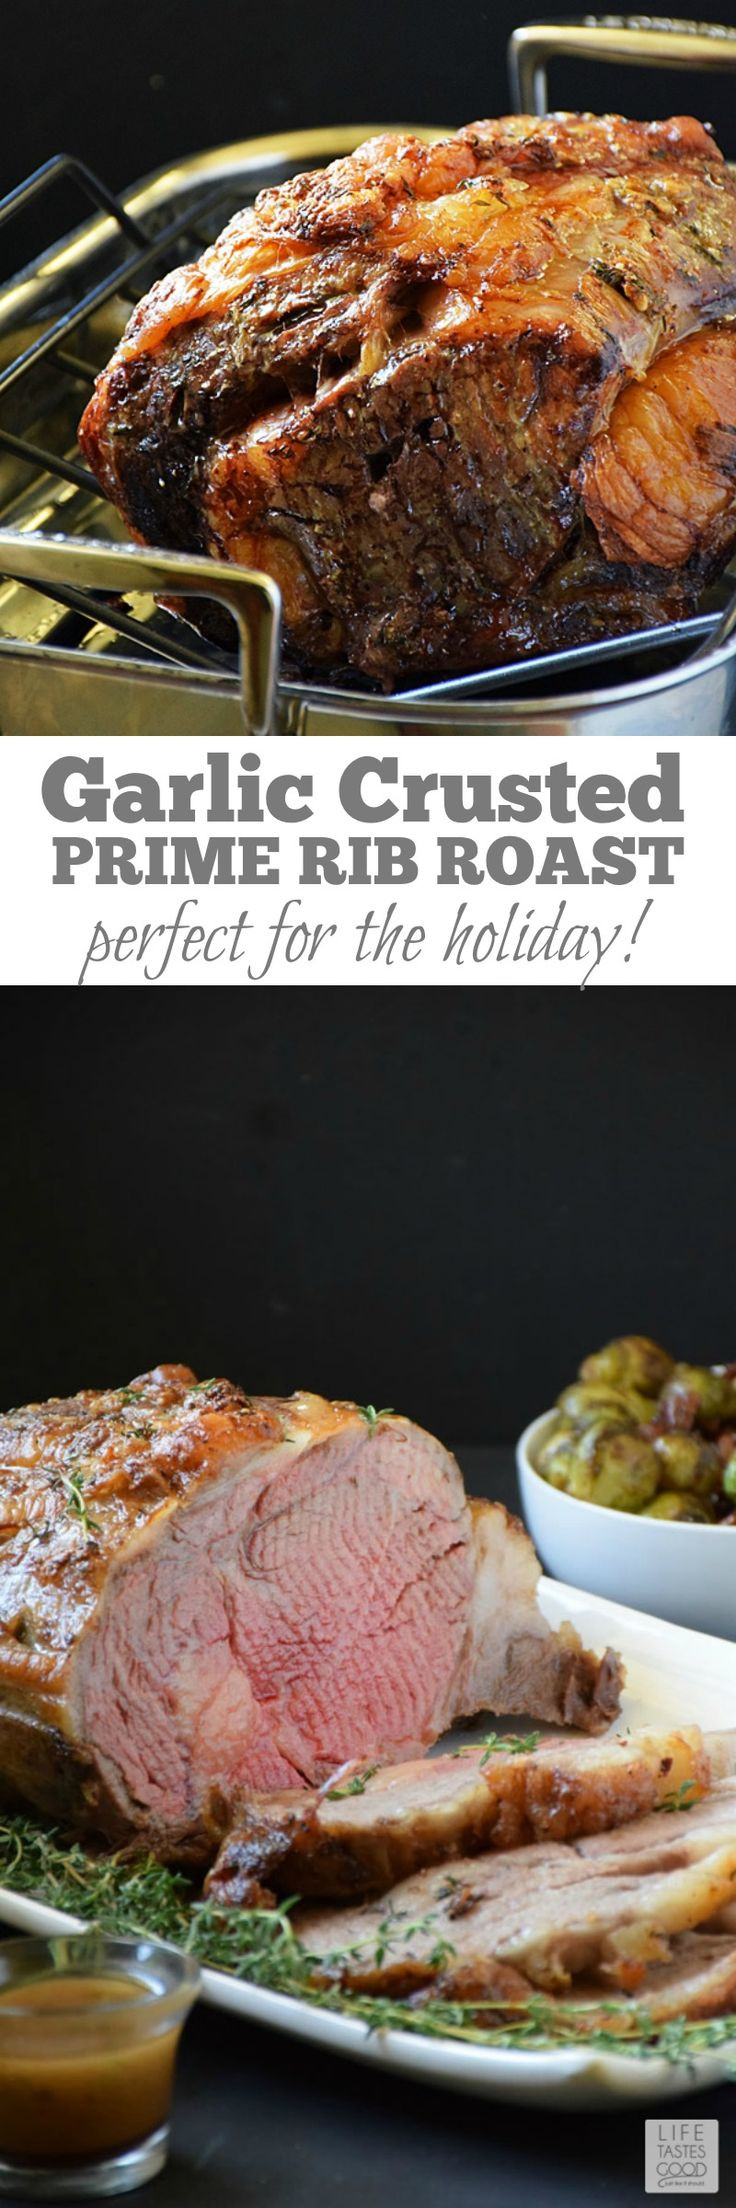 Prime Rib Christmas Menu
 Best 25 Xmas dinner ideas ideas on Pinterest